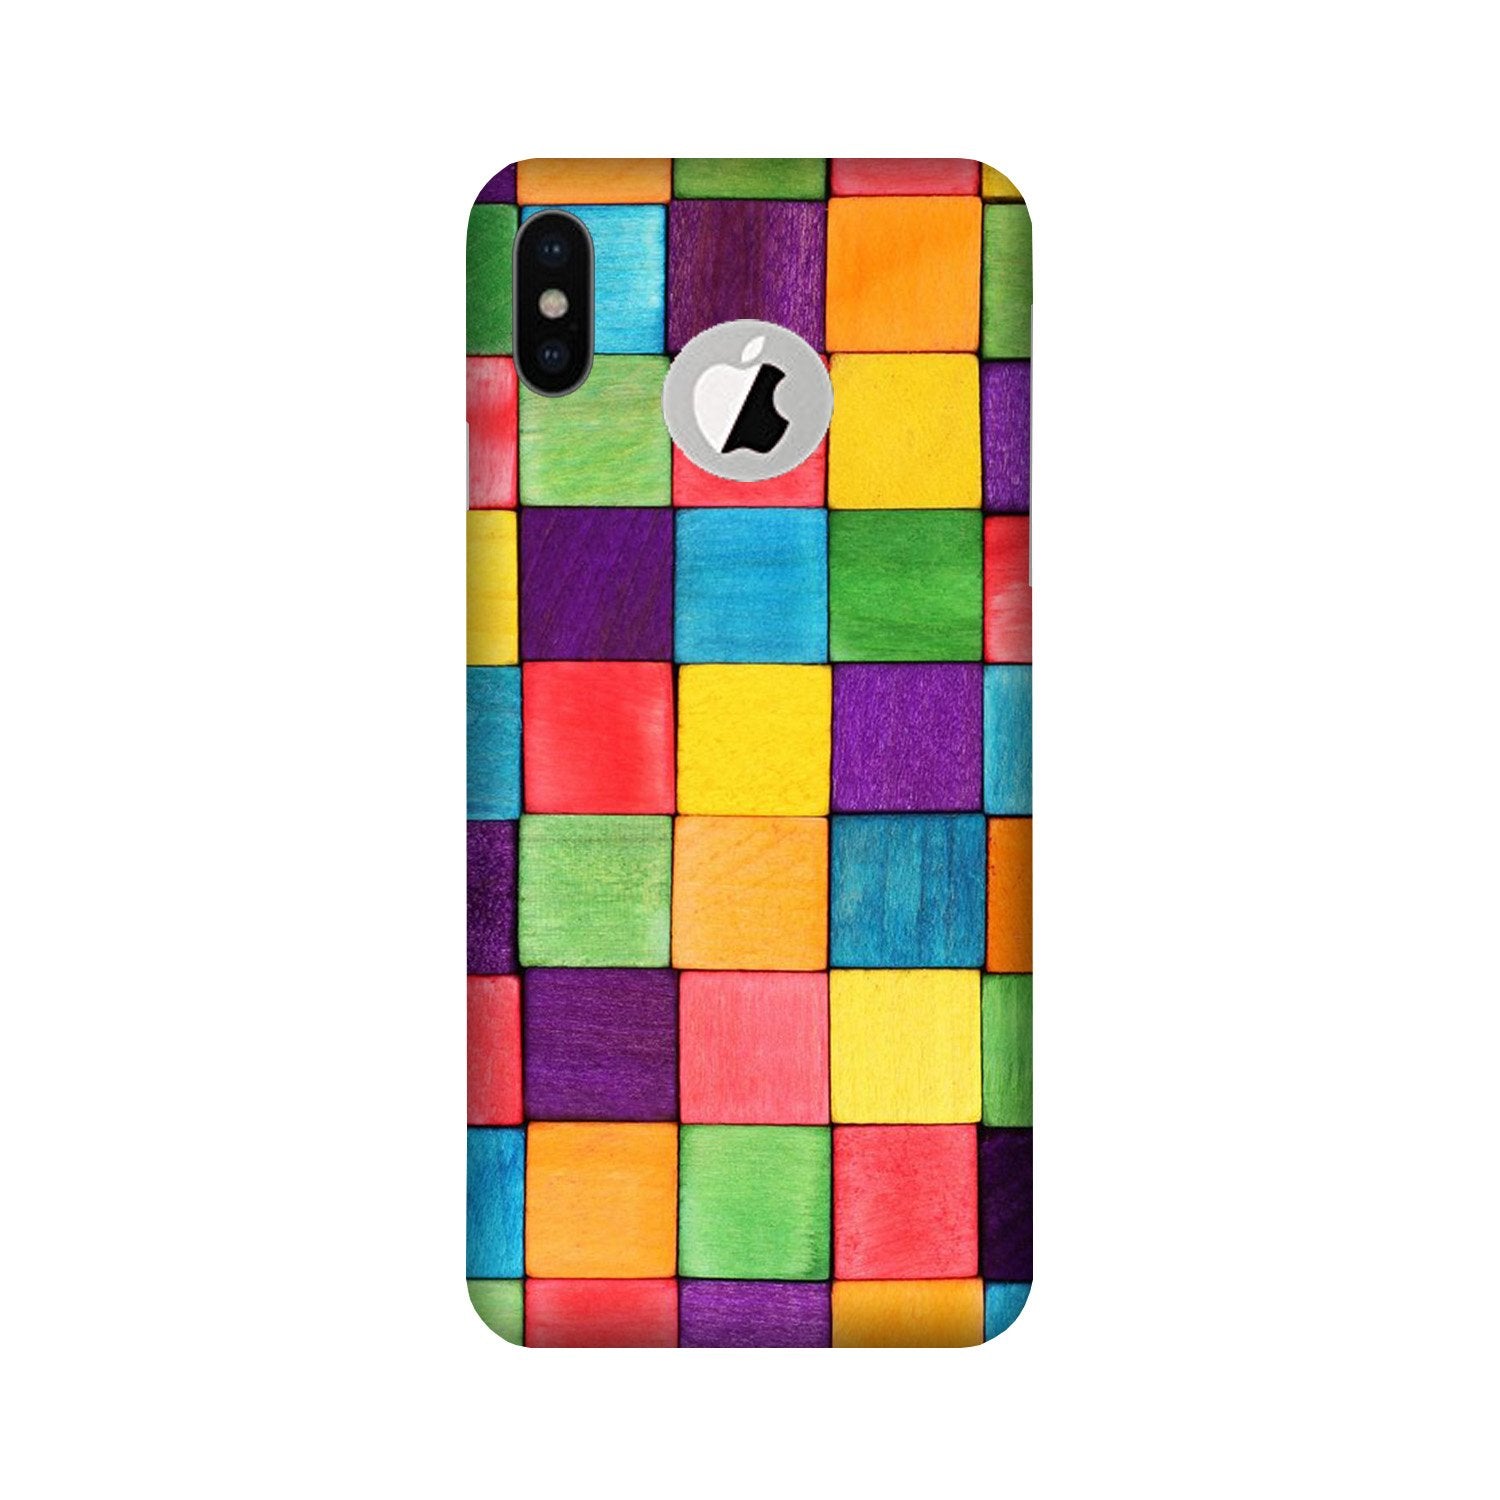 Colorful Square Case for iPhone X logo cut (Design No. 218)